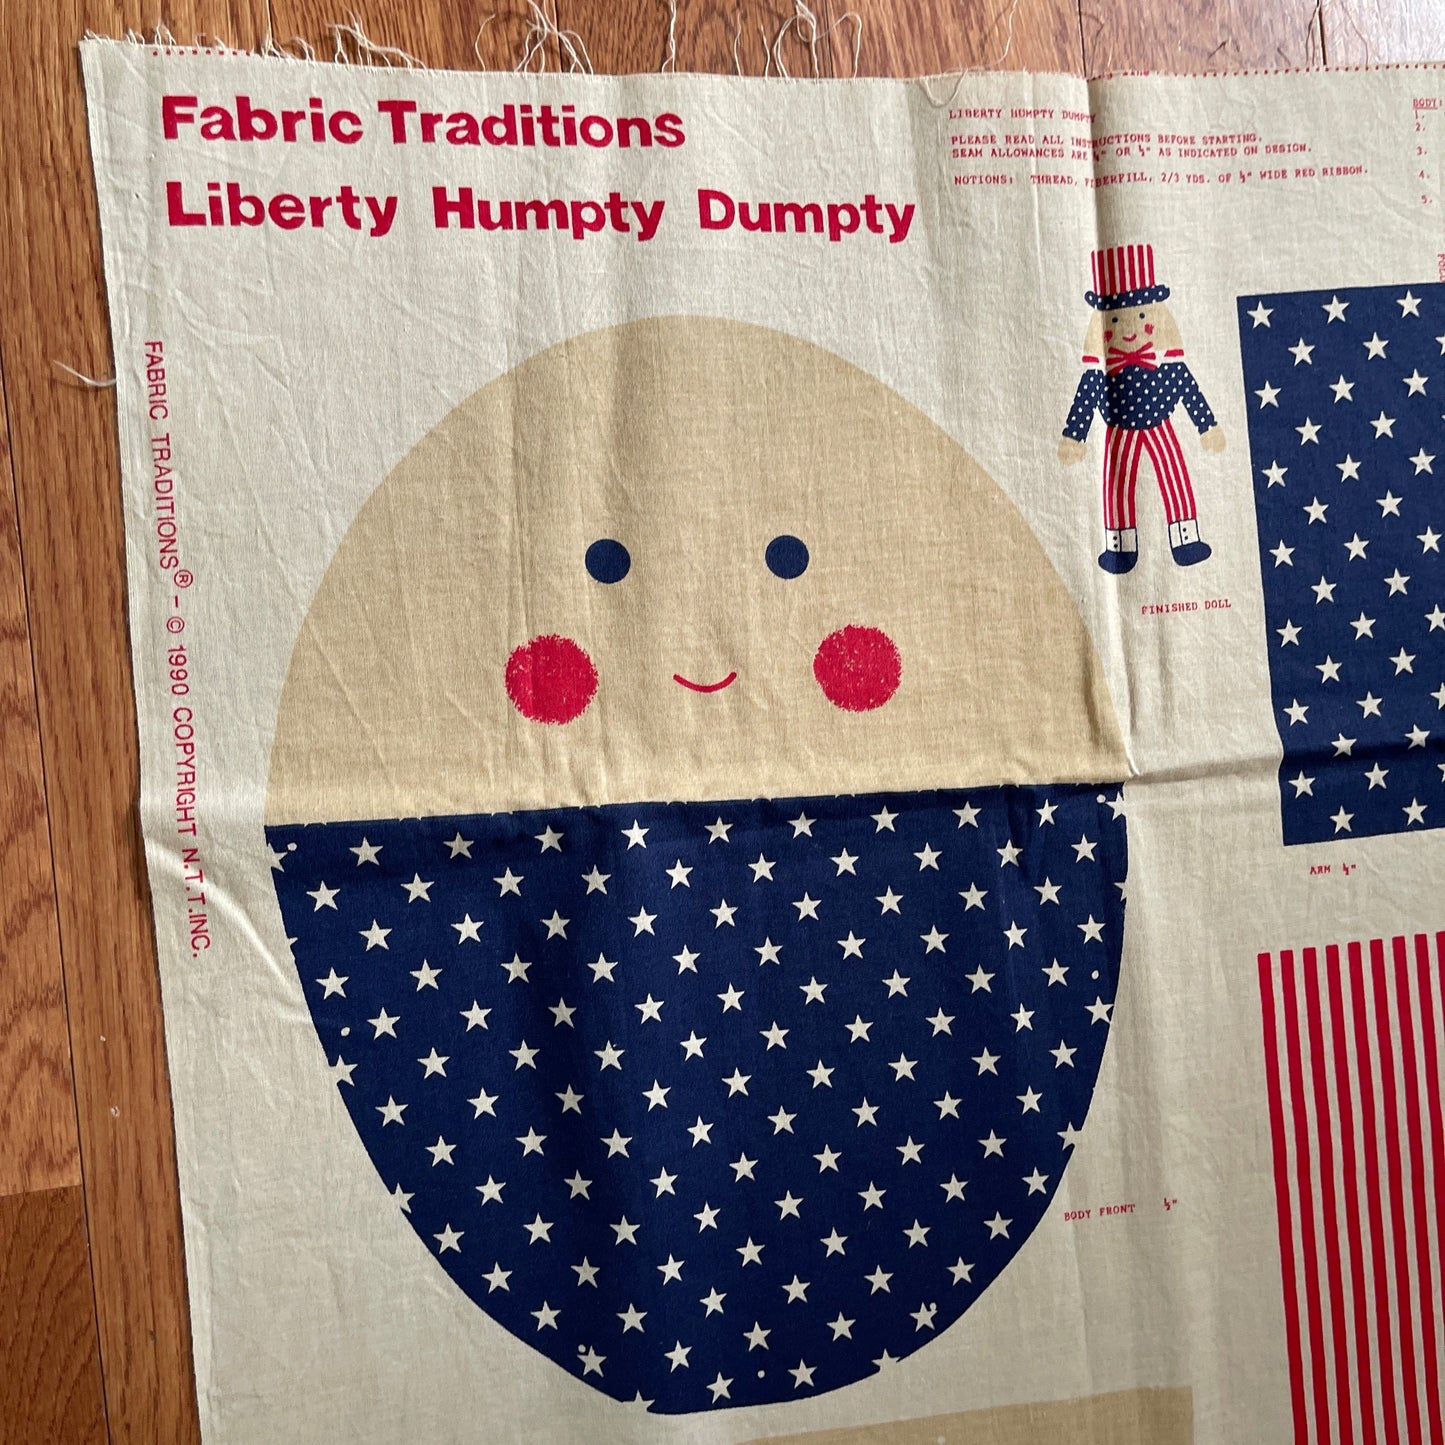 Fabric Traditions set of 2 Liberty Humpty Dumpty 1990 and Liberty Santa Doll 1991 Vintage Fabric Panels